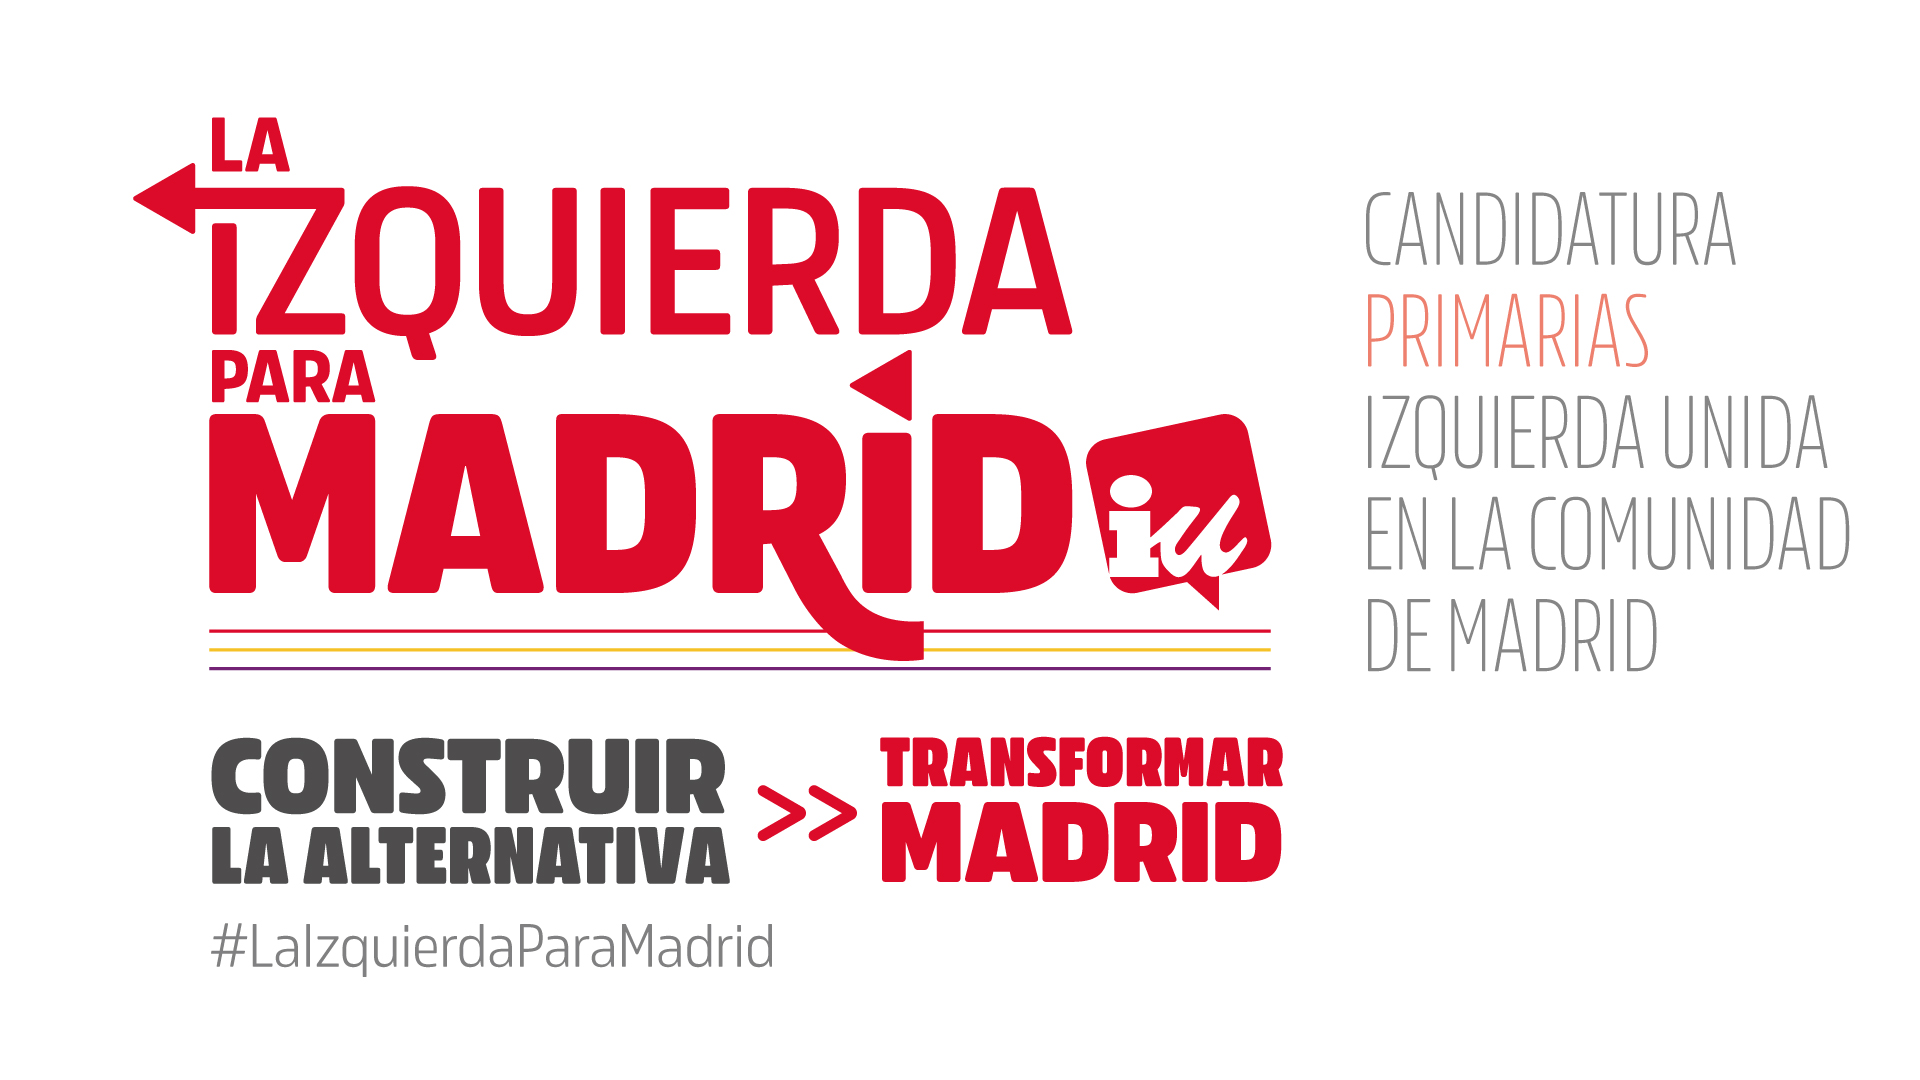 La Izquierda para Madrid